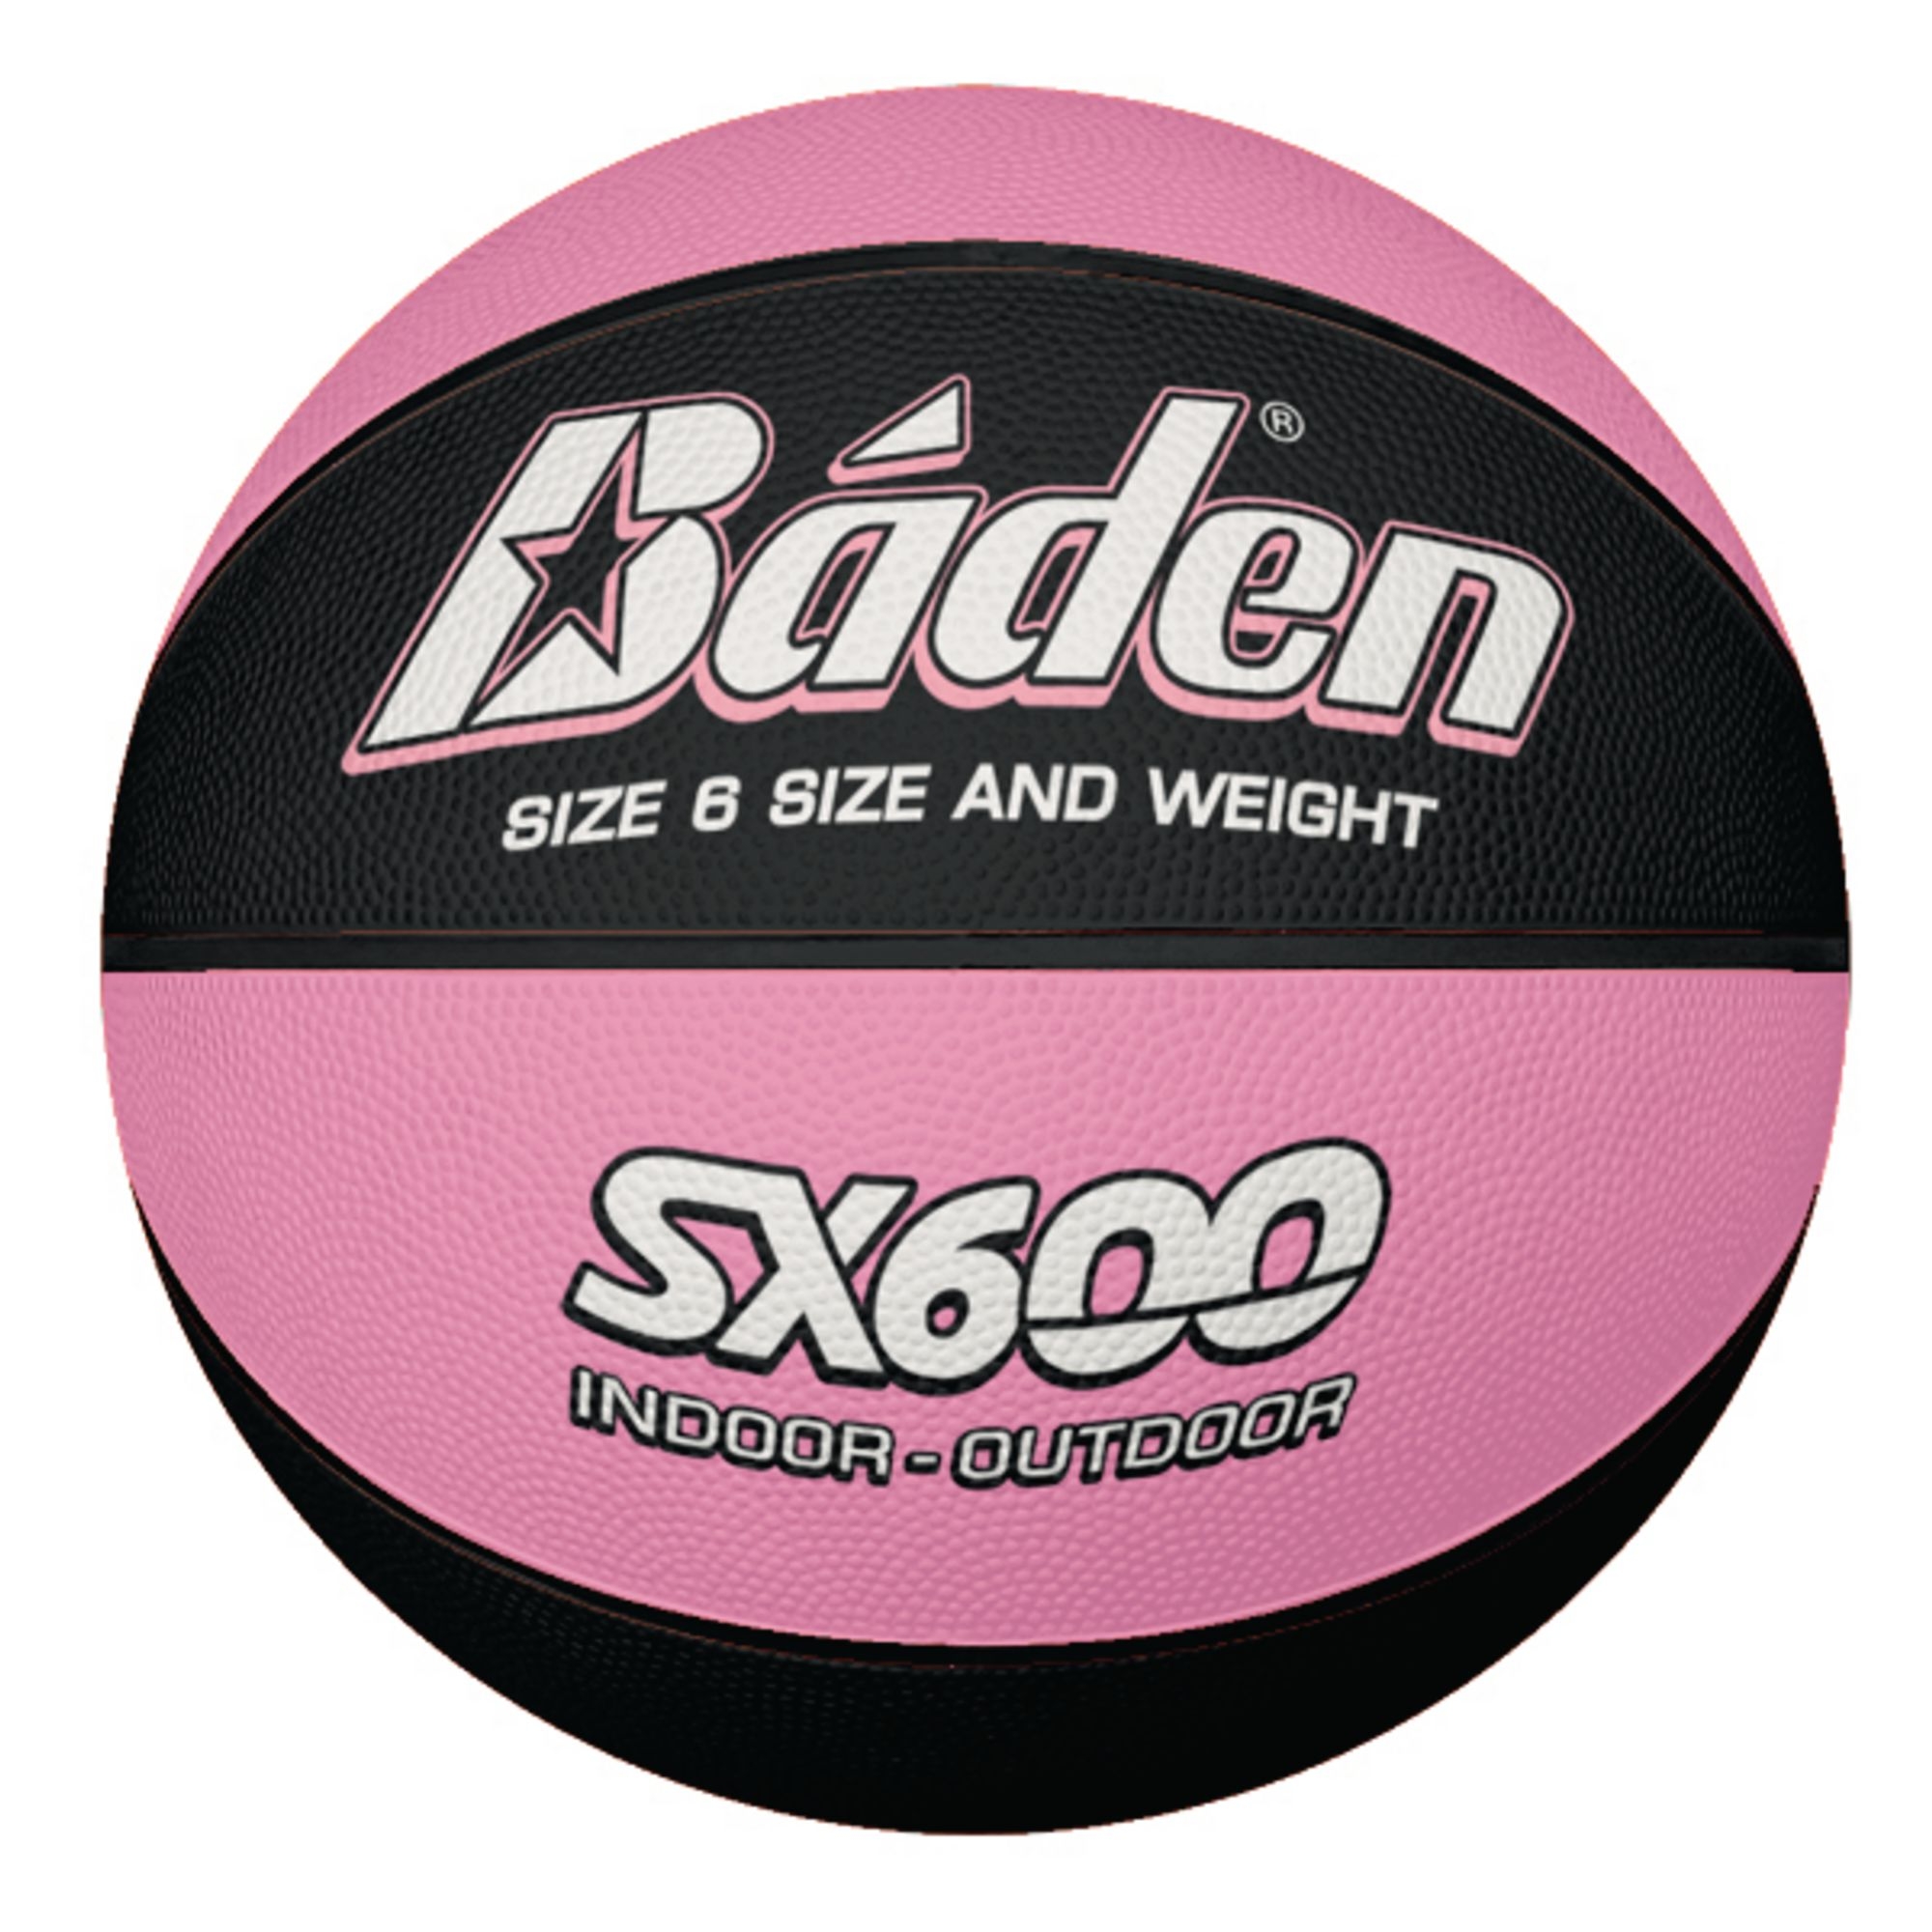 Baden SX600 Basketball - Size 6 - Pink/Black